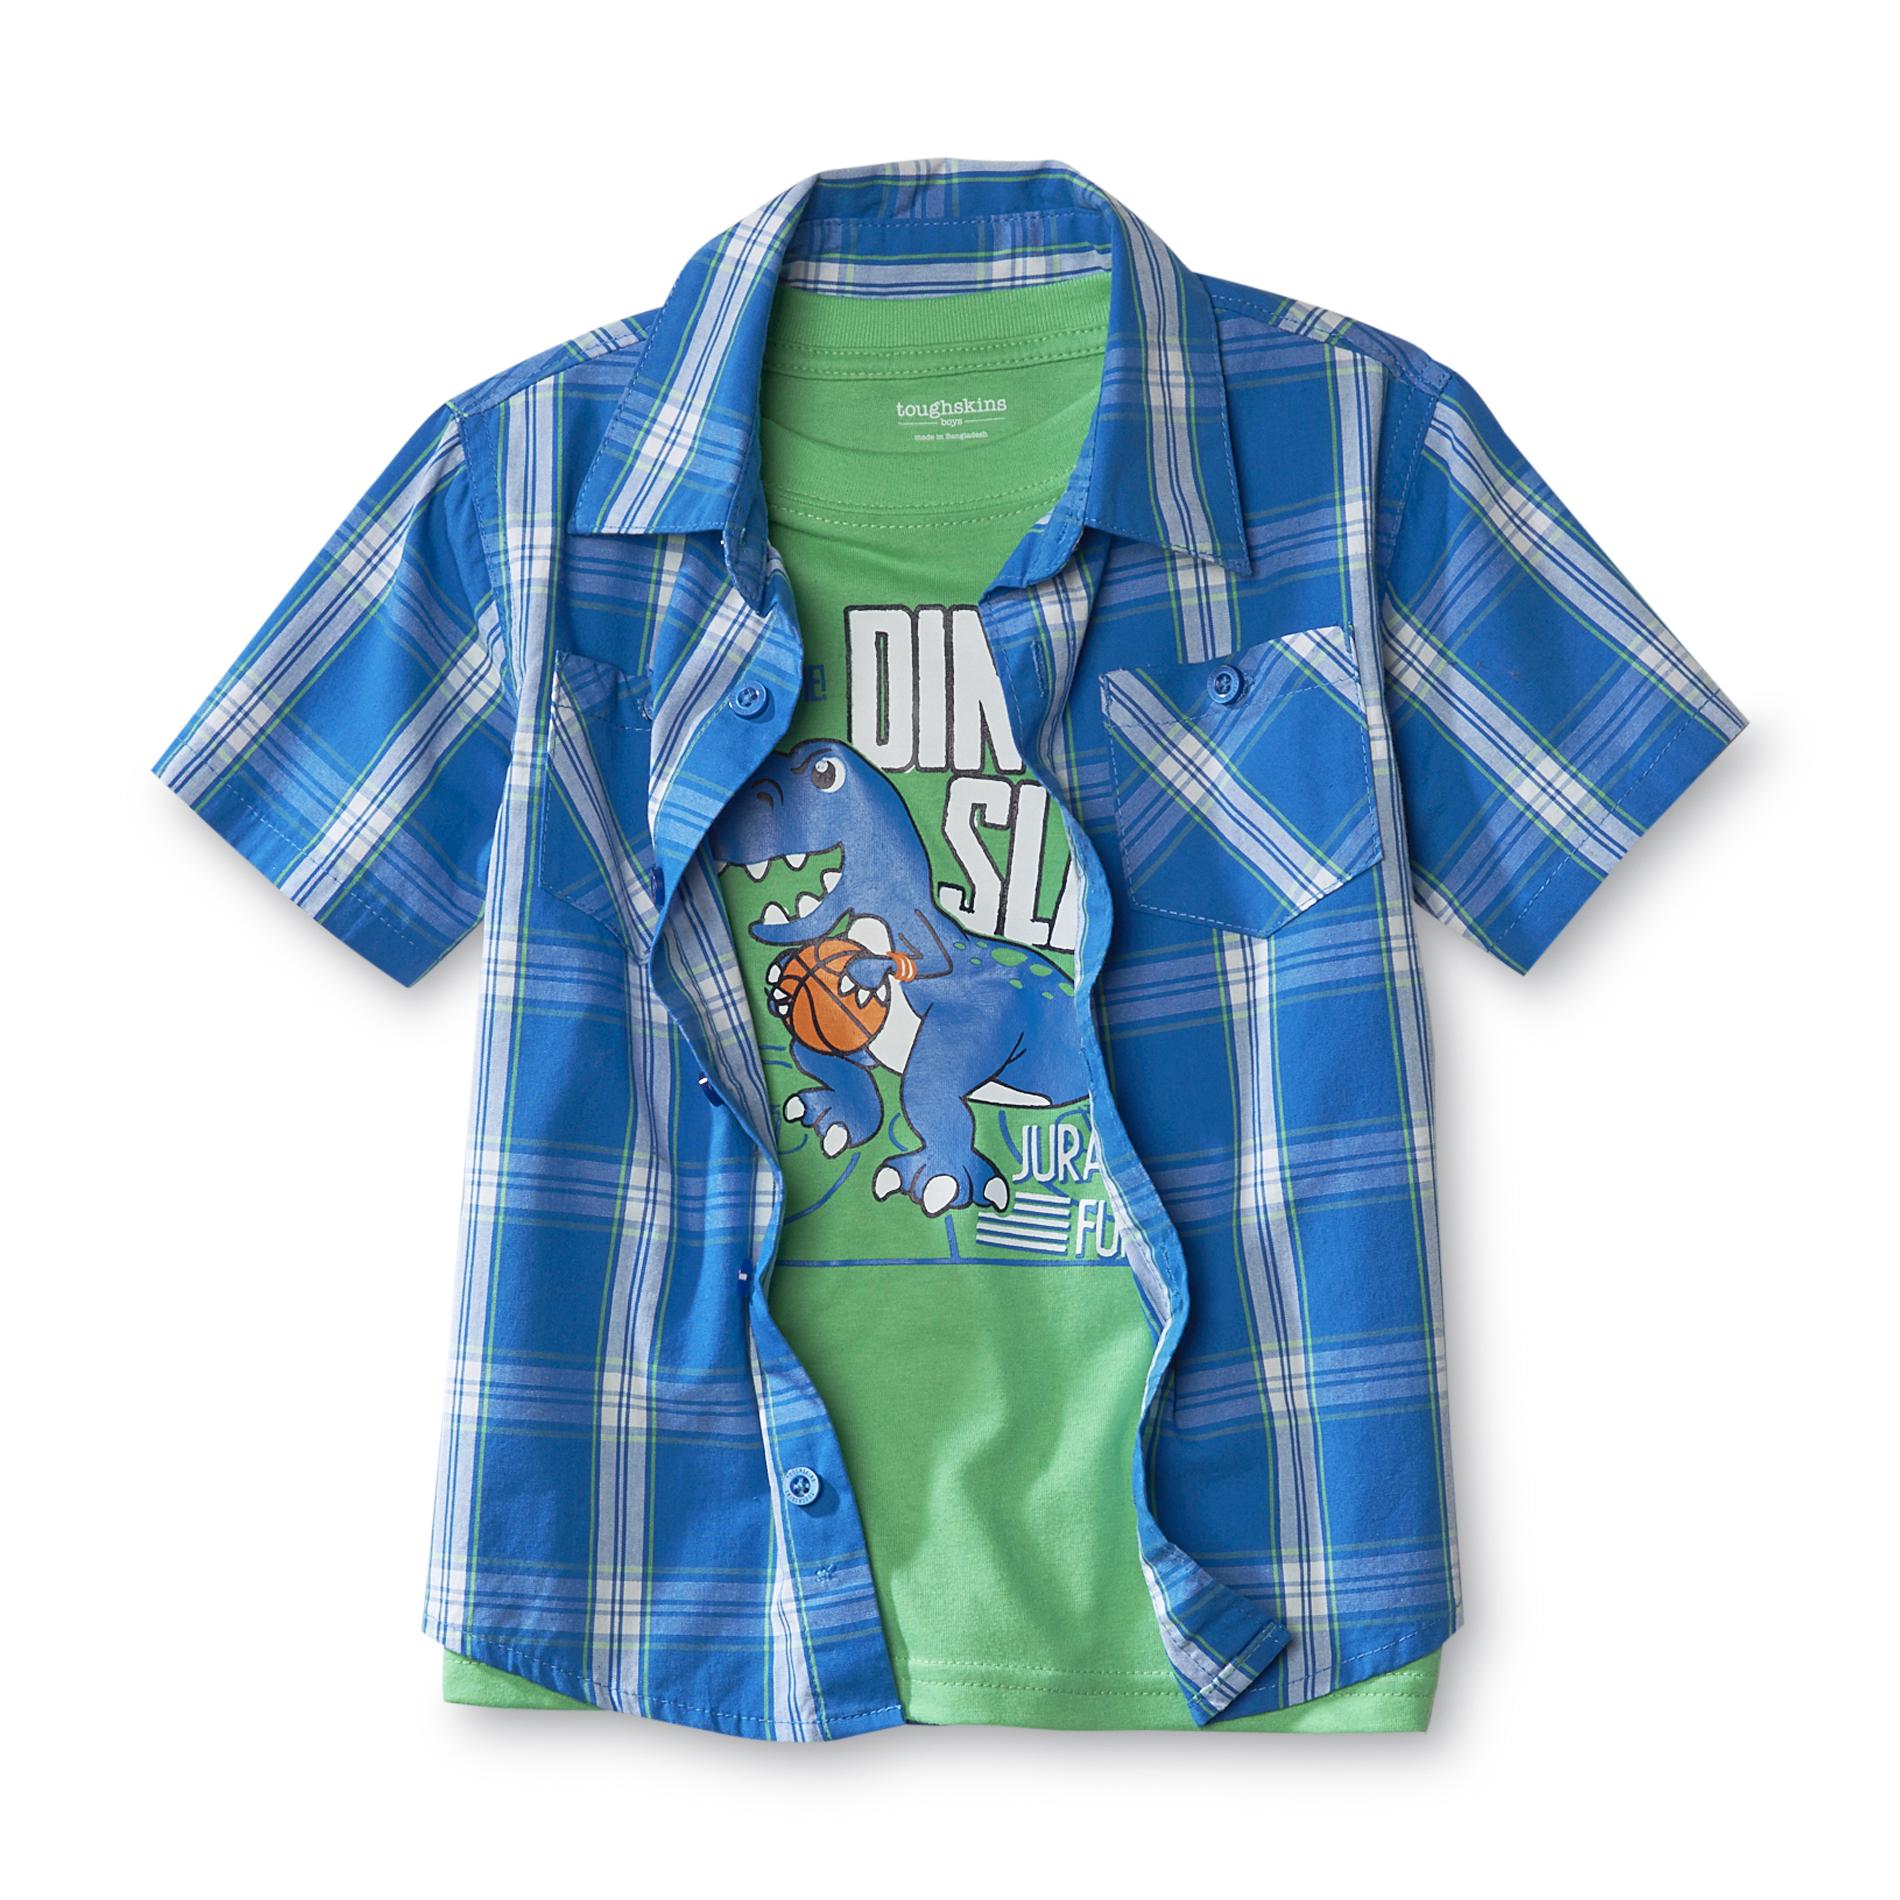 Toughskins Infant & Toddler Boy's Plaid T-Shirt & Button-Front Shirt - Basketball Dinosaur